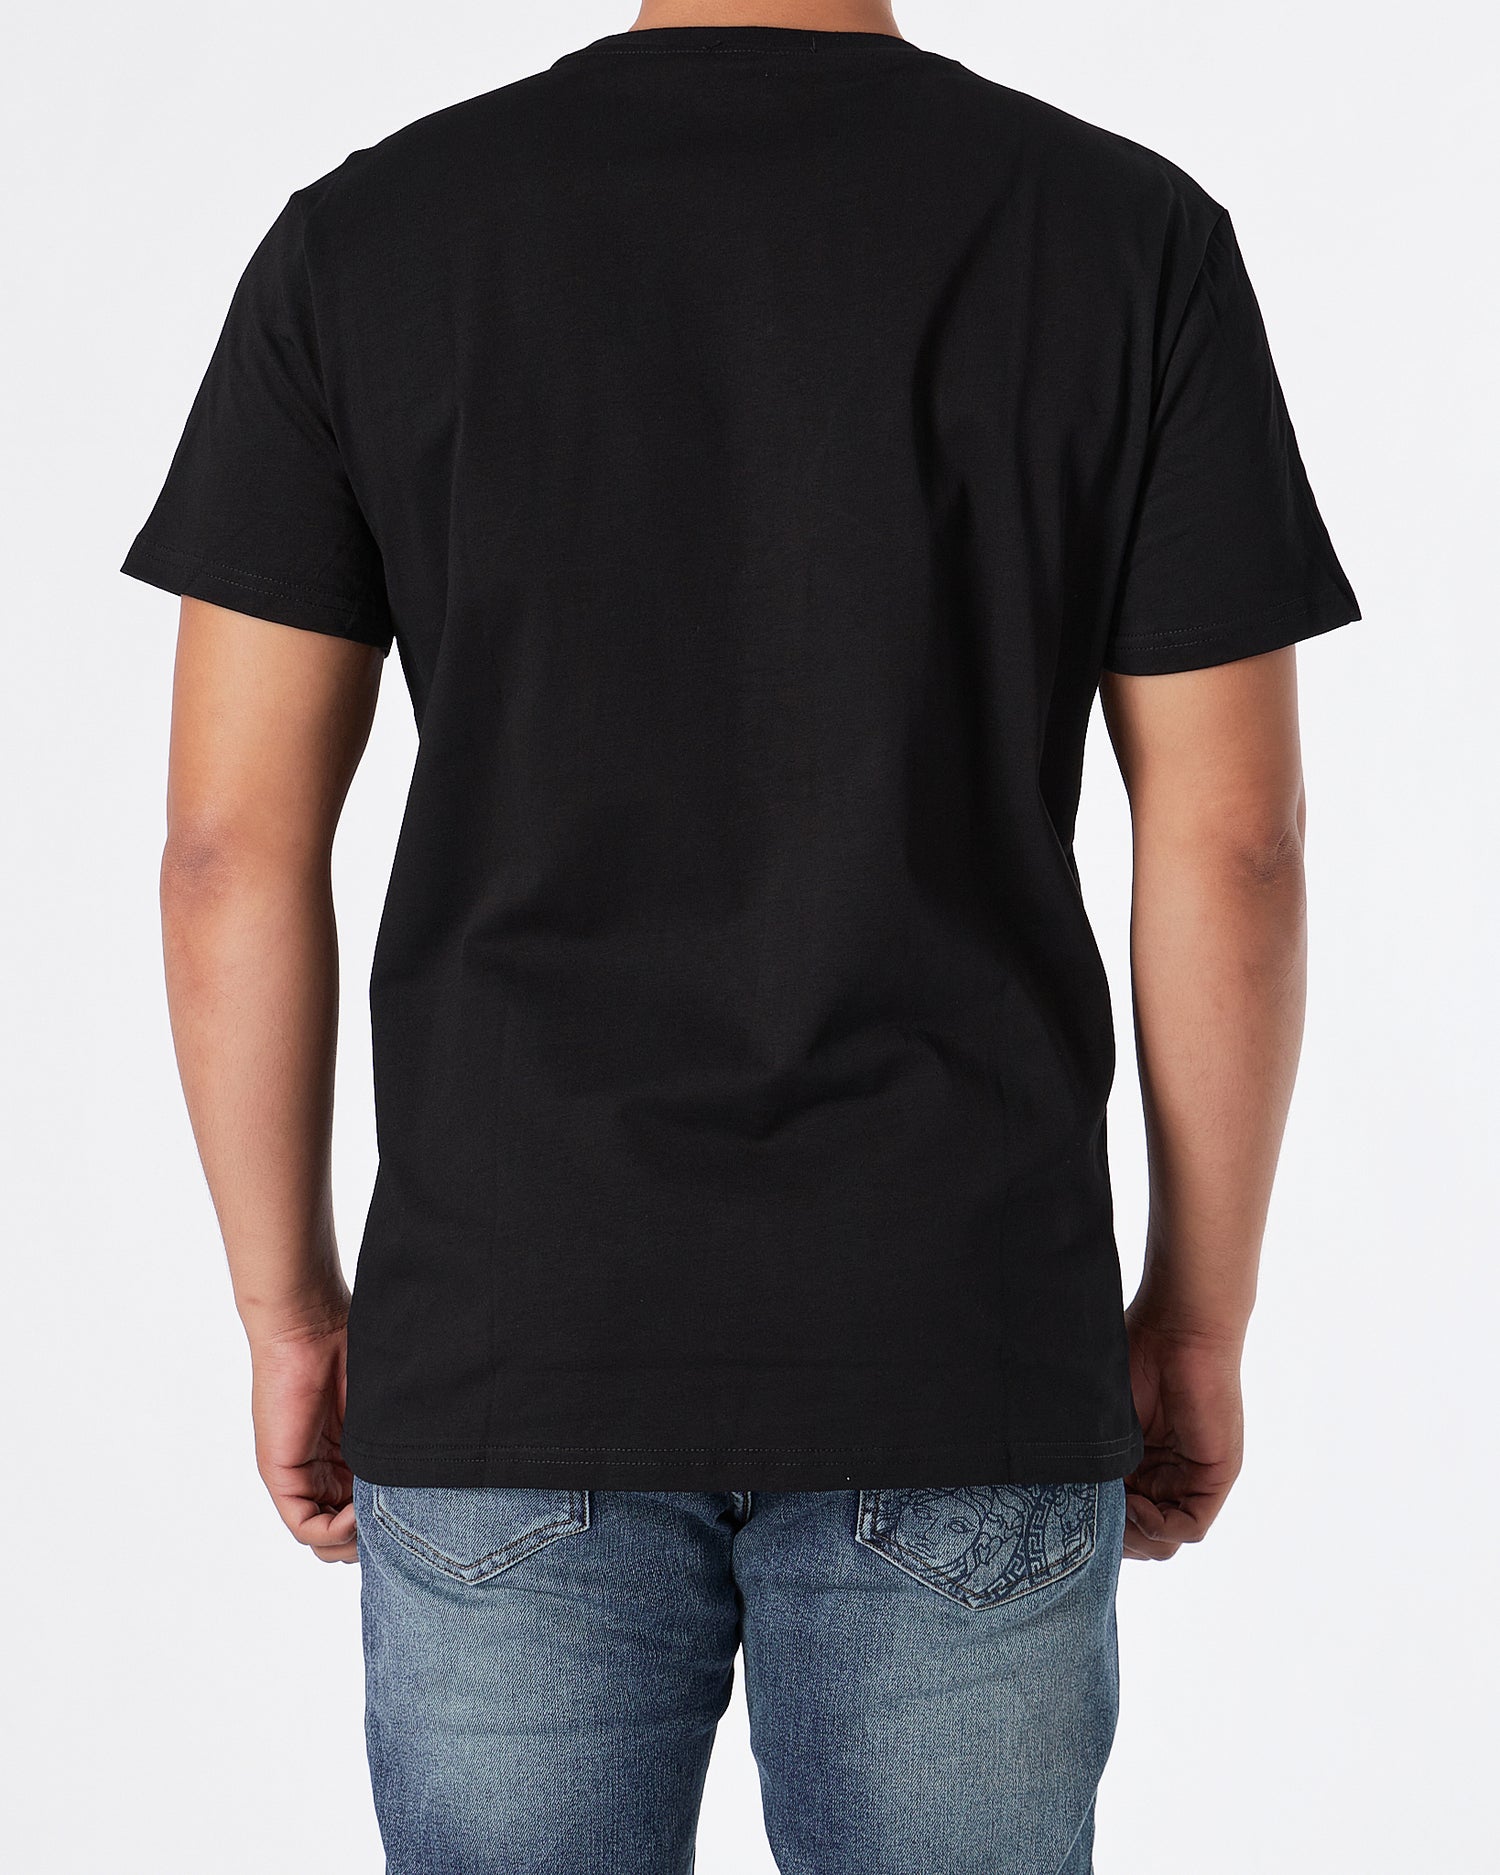 VER Rhinestone Medusa Men Black T-Shirt 22.90